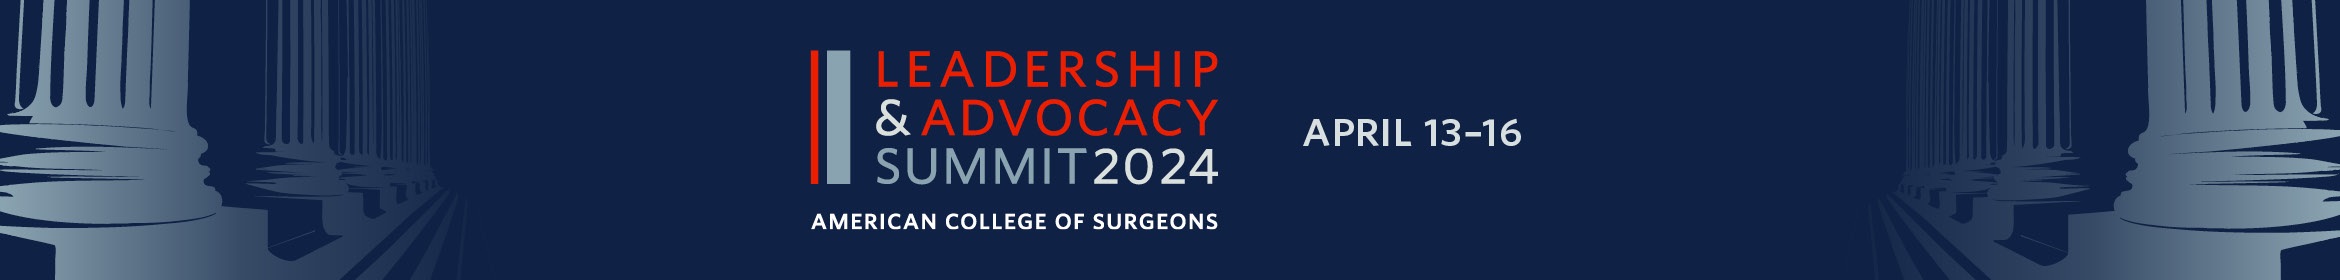 2024 Leadership Summit Main banner